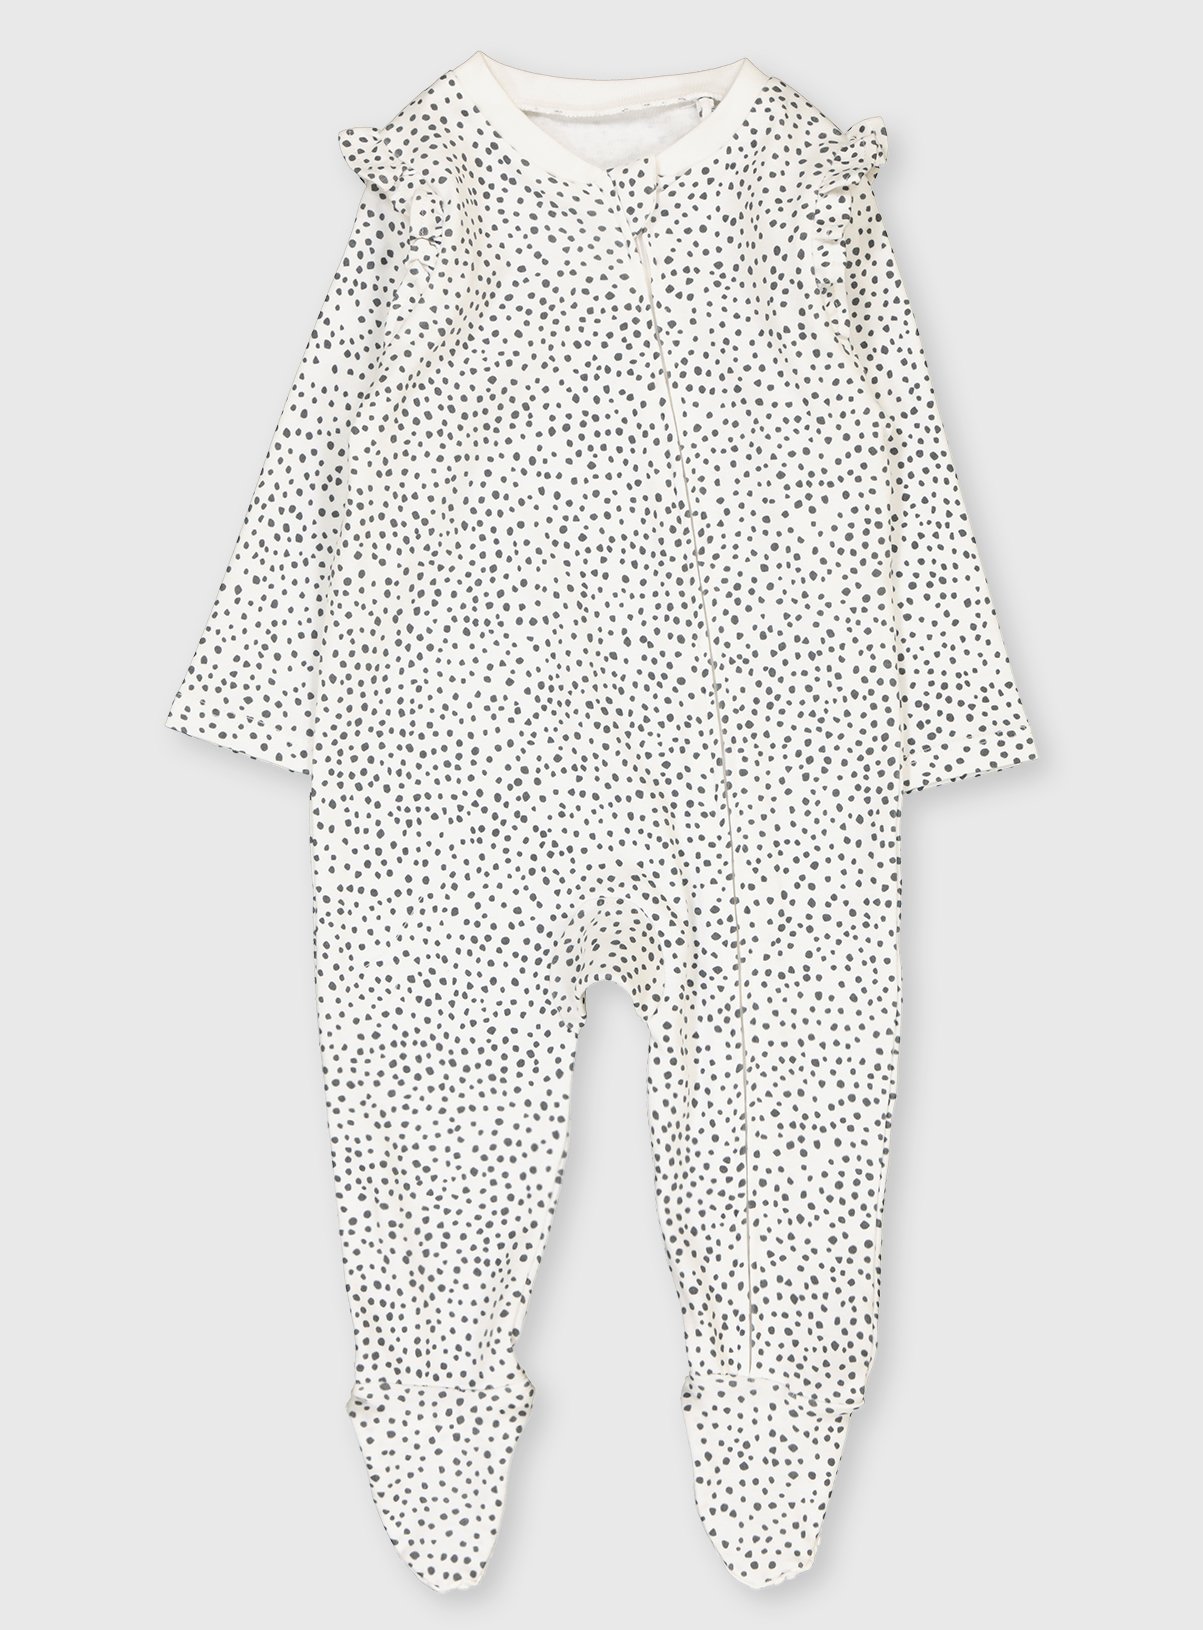 Baby Sleepsuits | Baby grows | Tu clothing